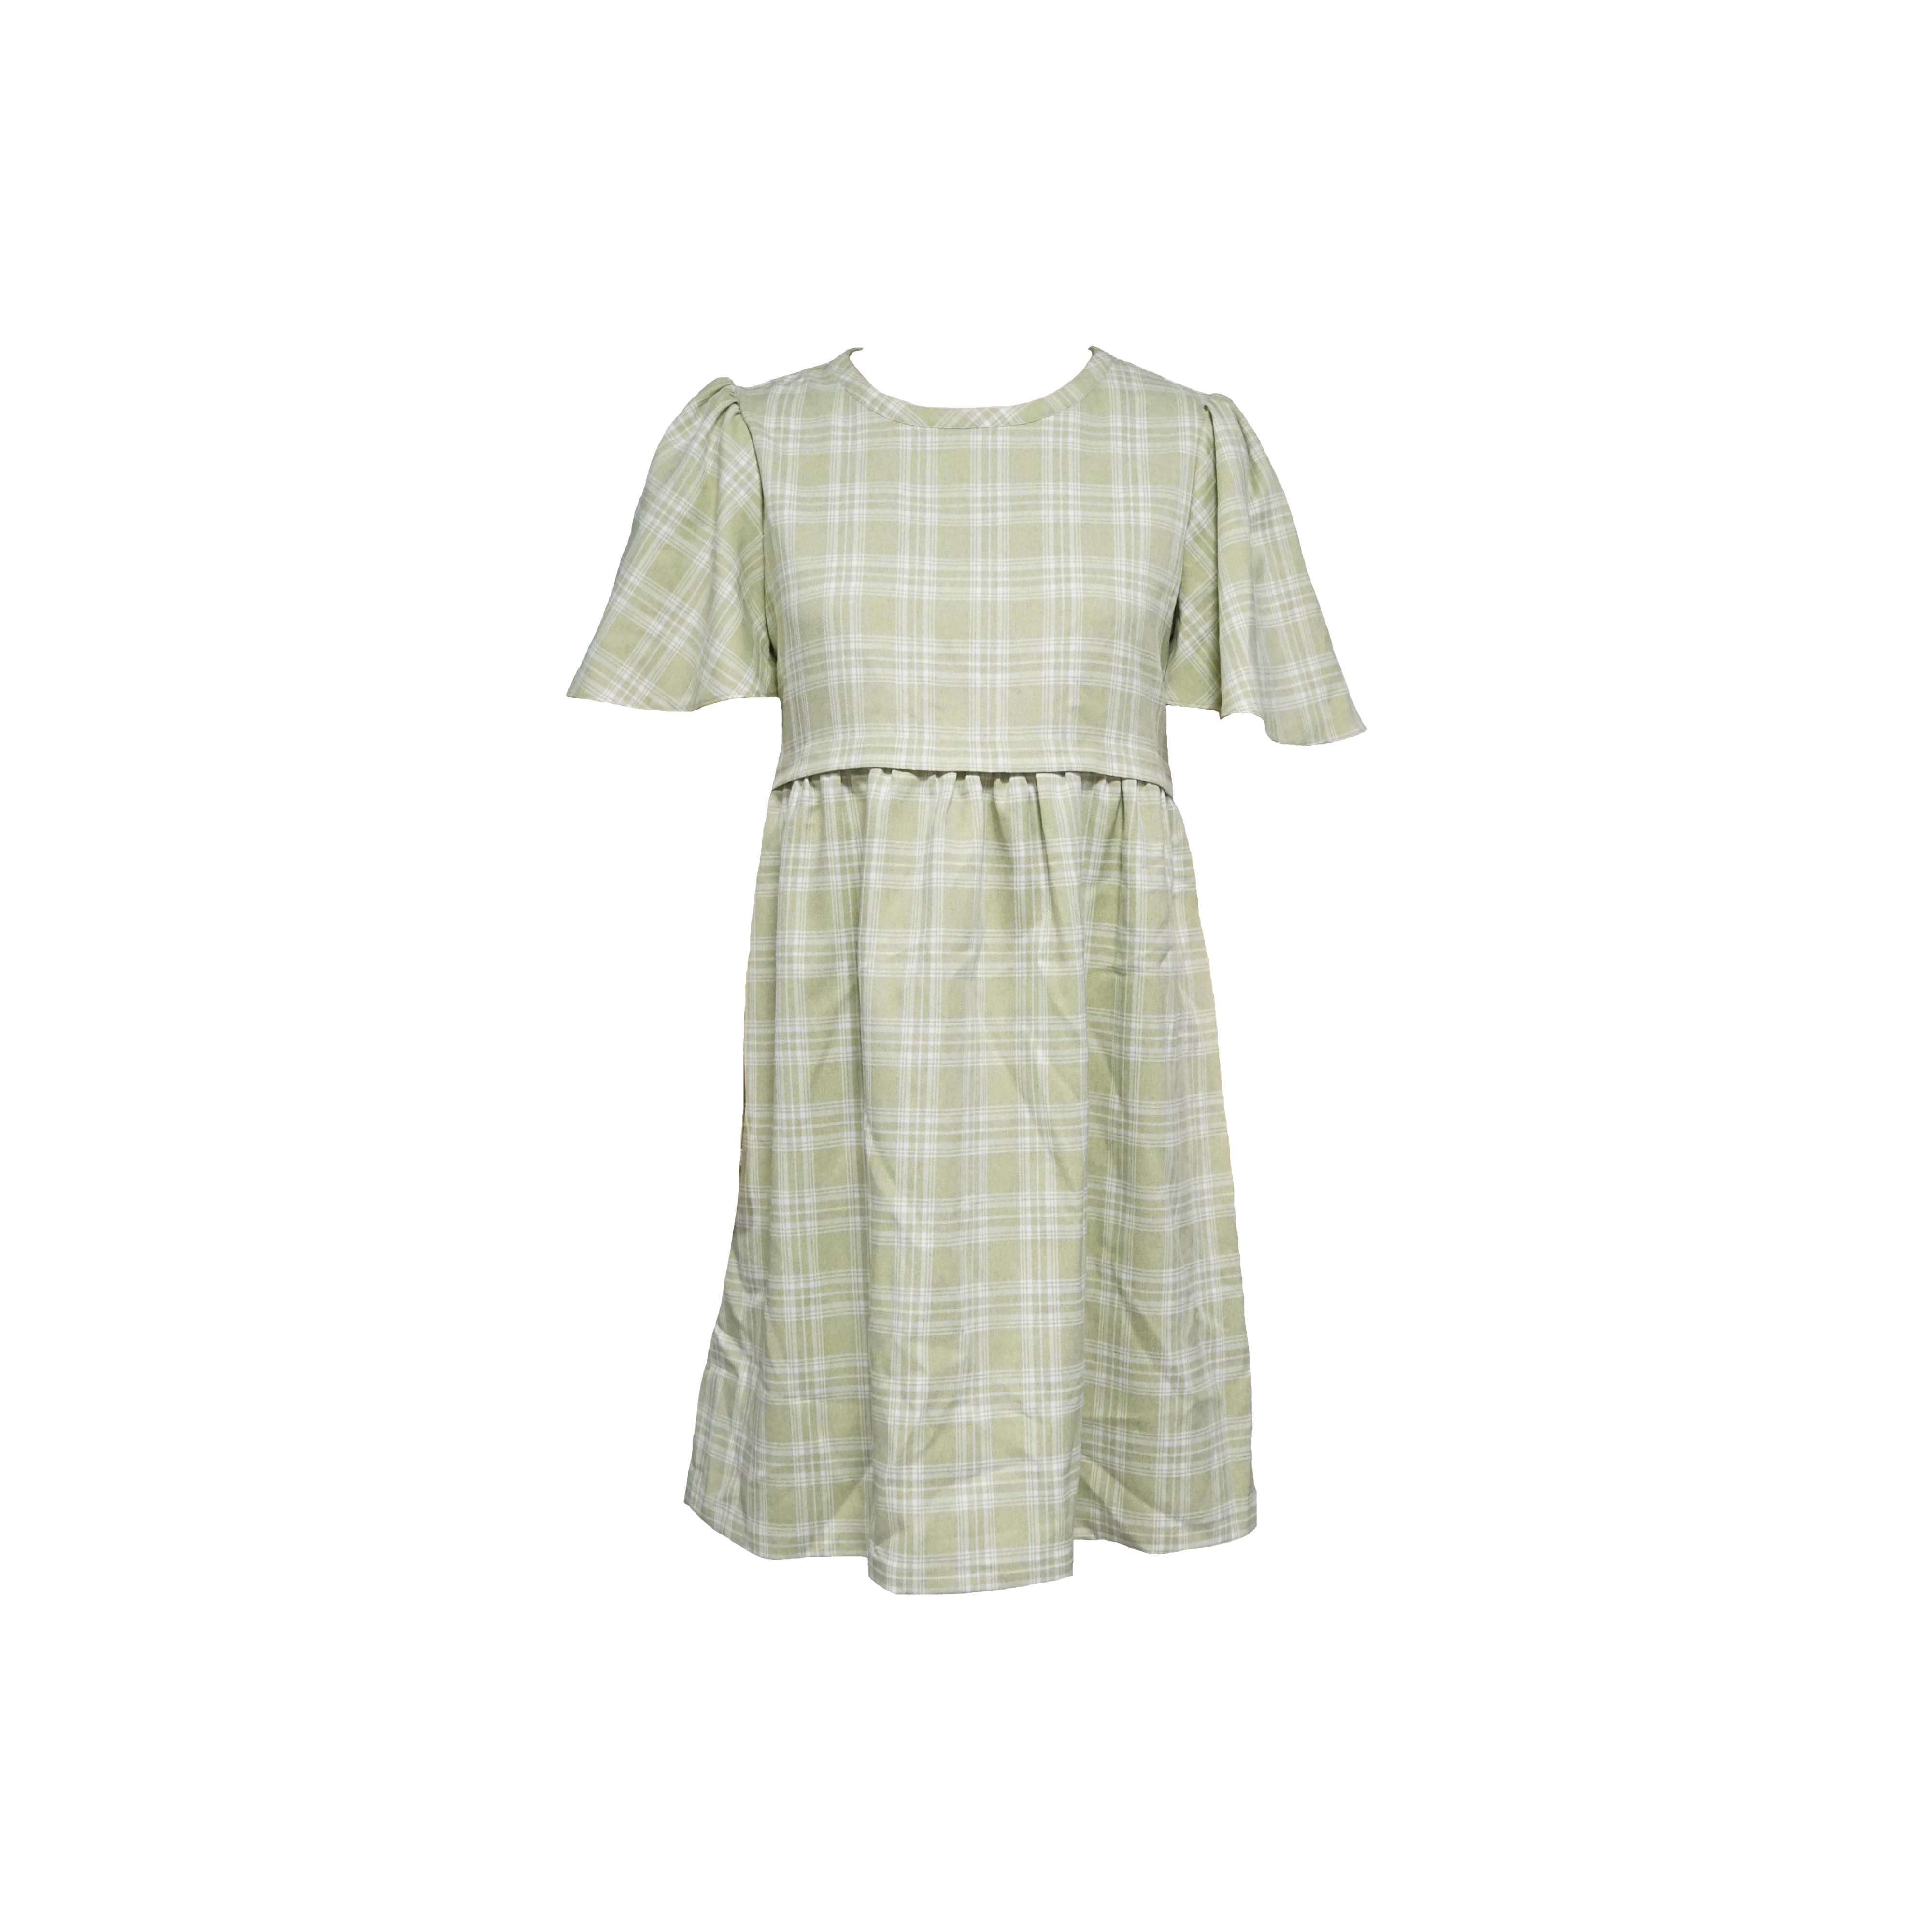 Green and White Plaid Nursing Skirt